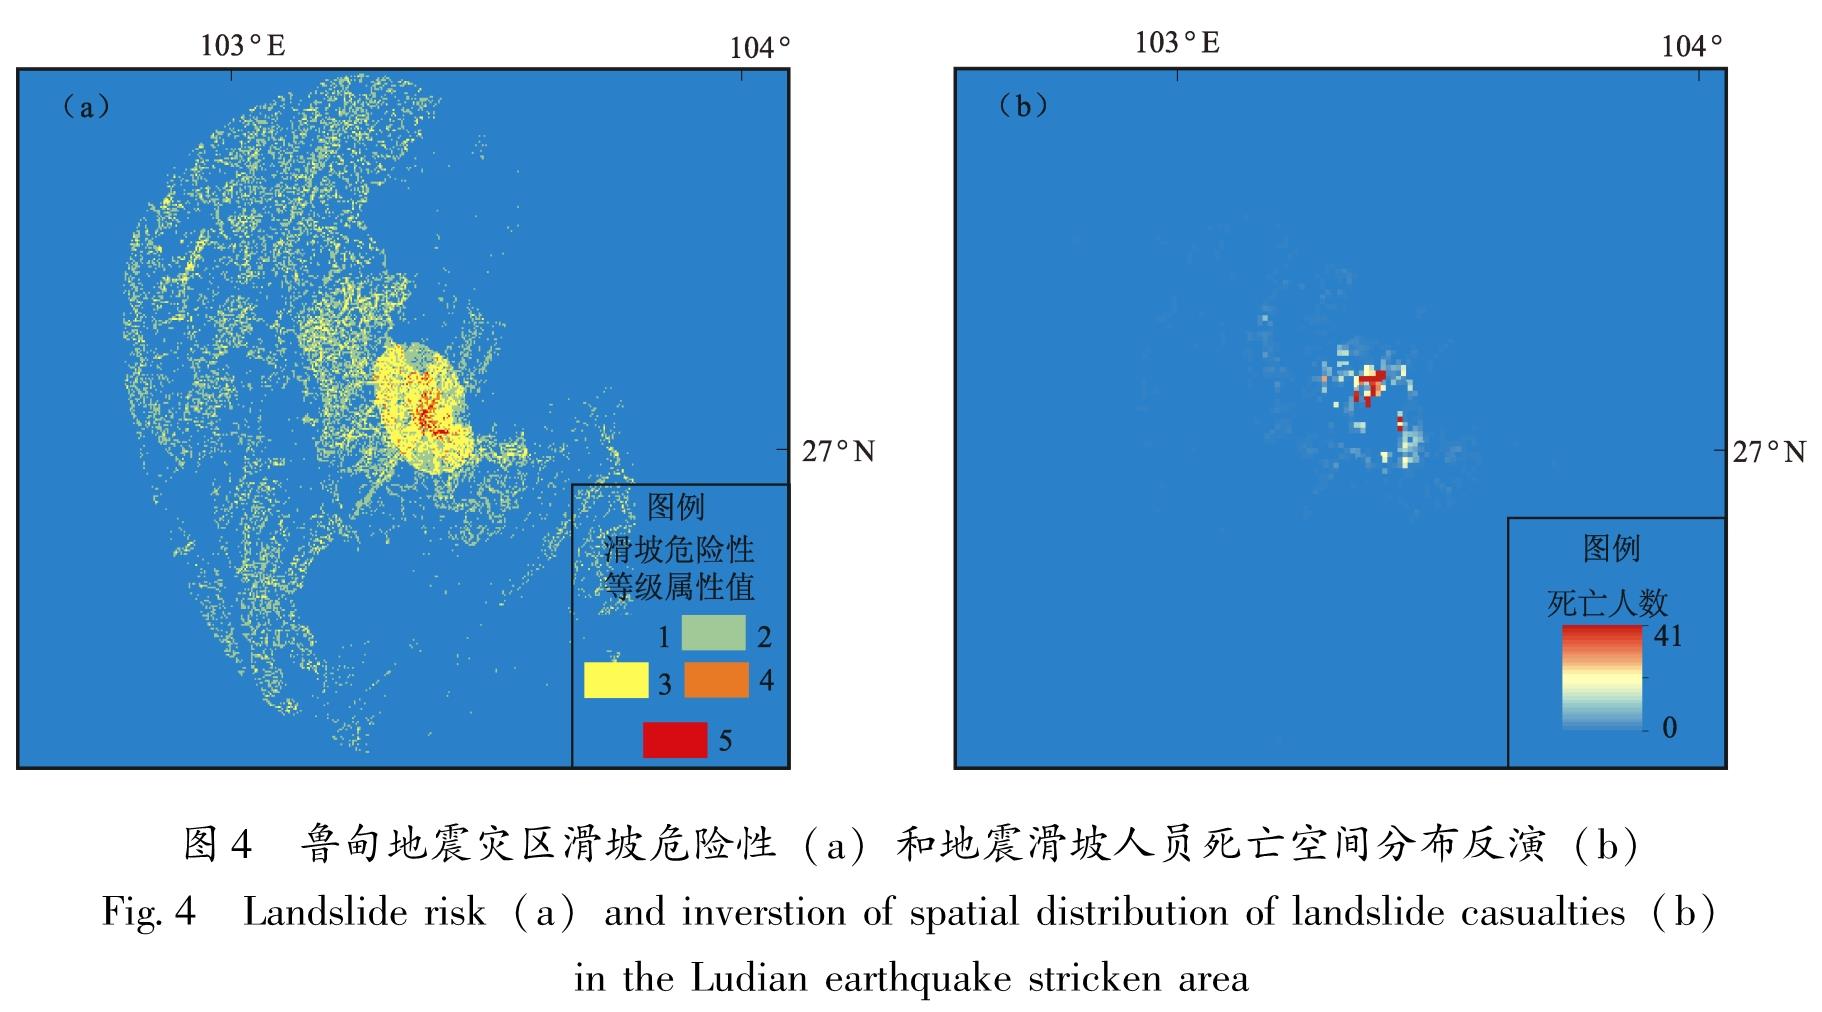 图4 鲁甸地震灾区滑坡危险性(a)和地震滑坡人员死亡空间分布反演(b)<br/>Fig.4 Landslide risk(a)and inverstion of spatial distribution of landslide casualties(b) in the Ludian earthquake stricken area